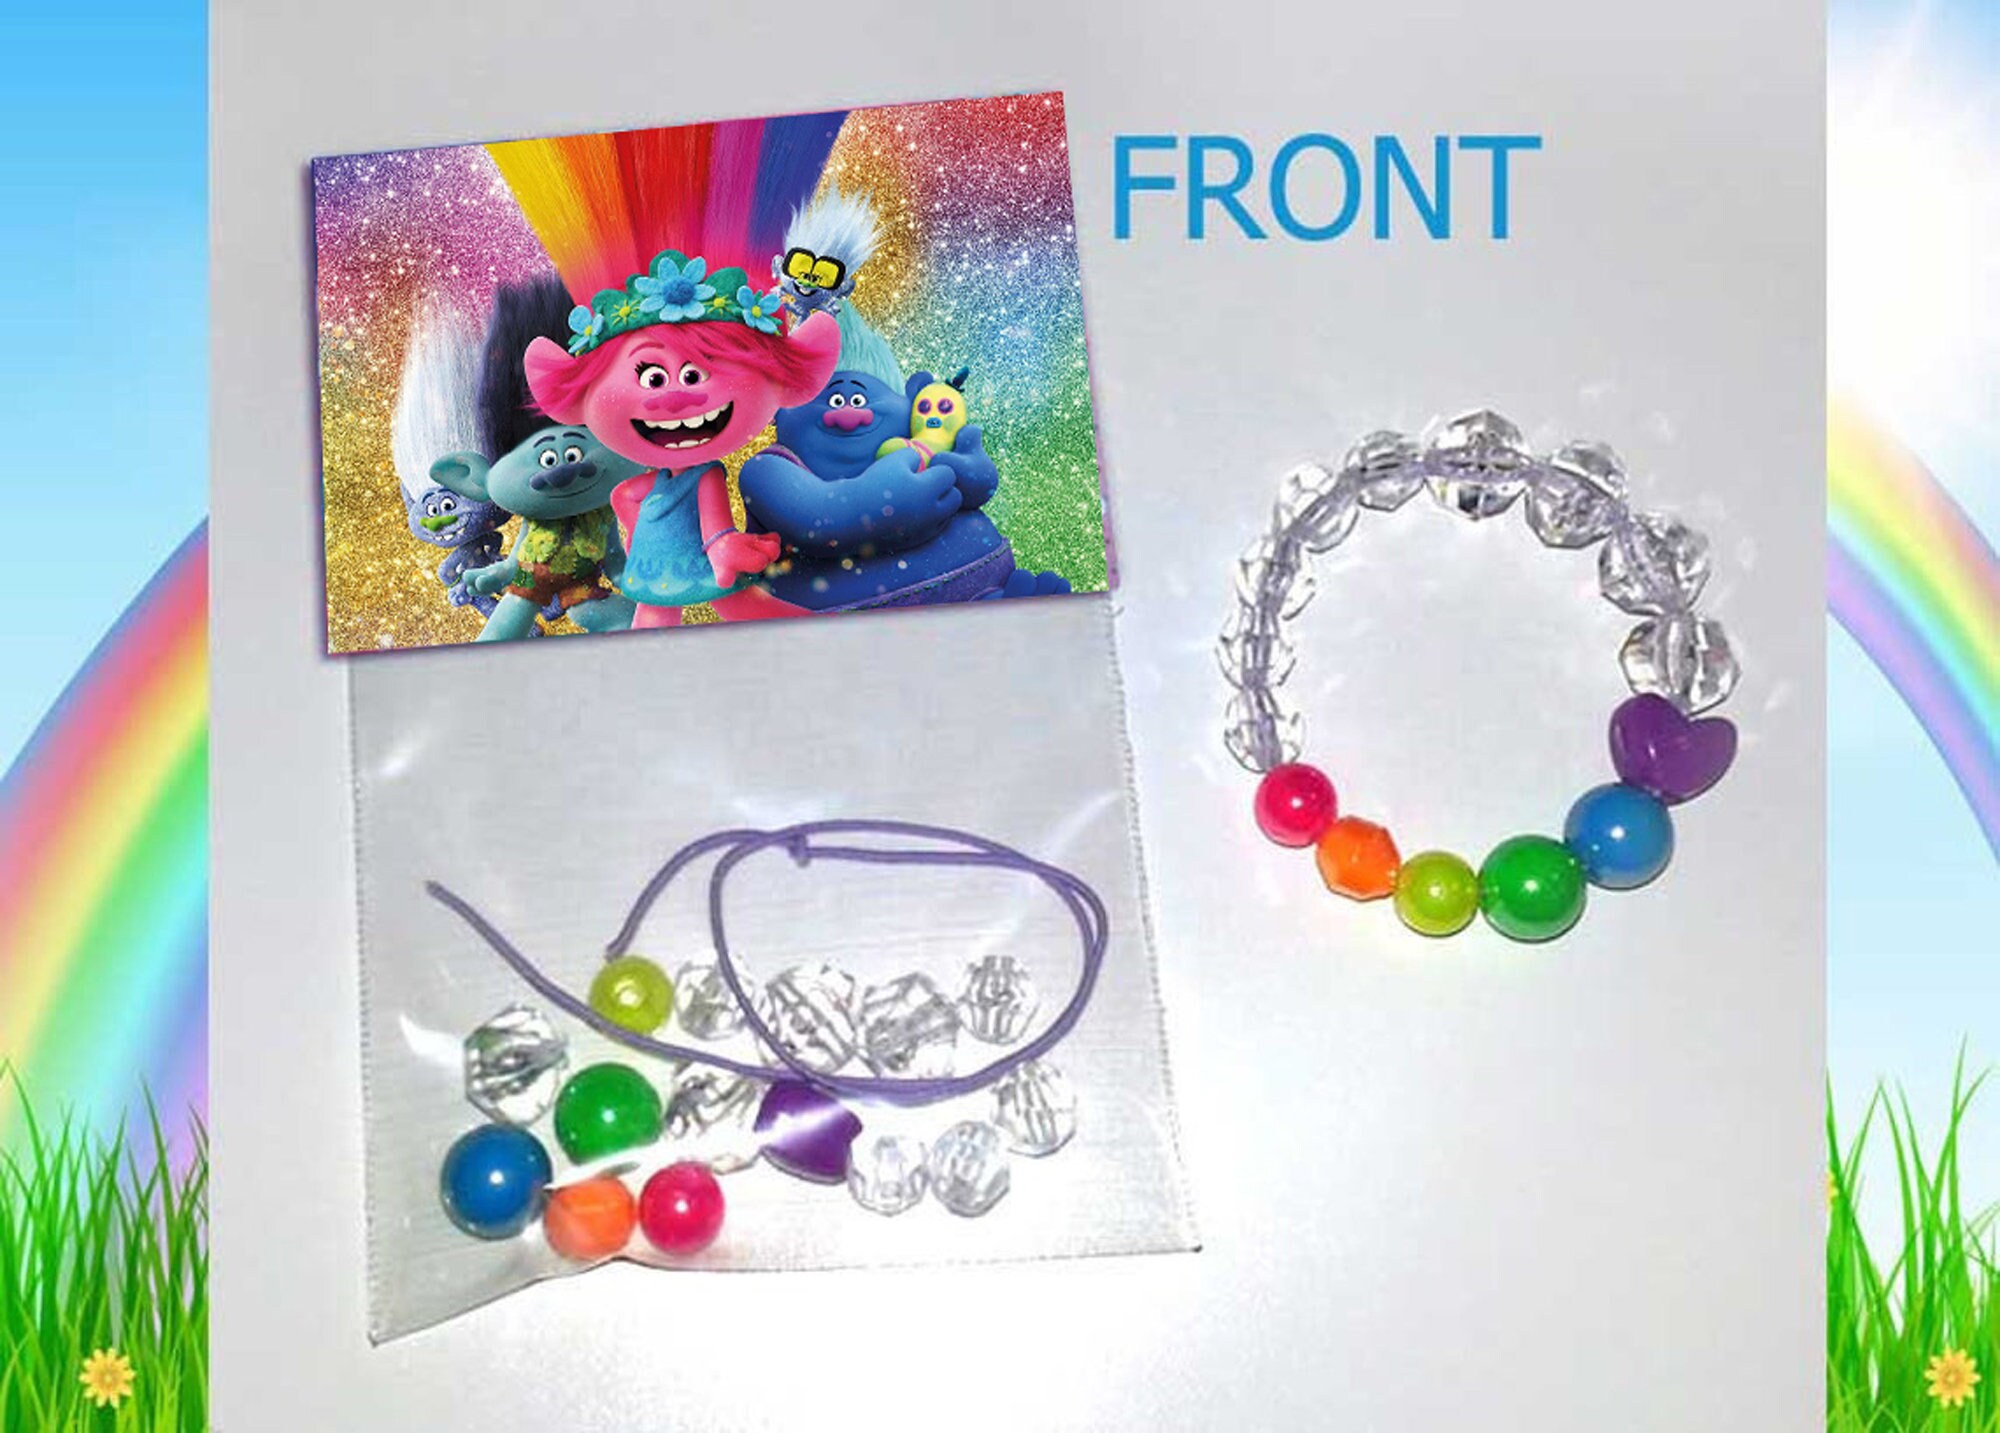 Trolls 'World Tour' Friendship Bracelets Kits (8ct)